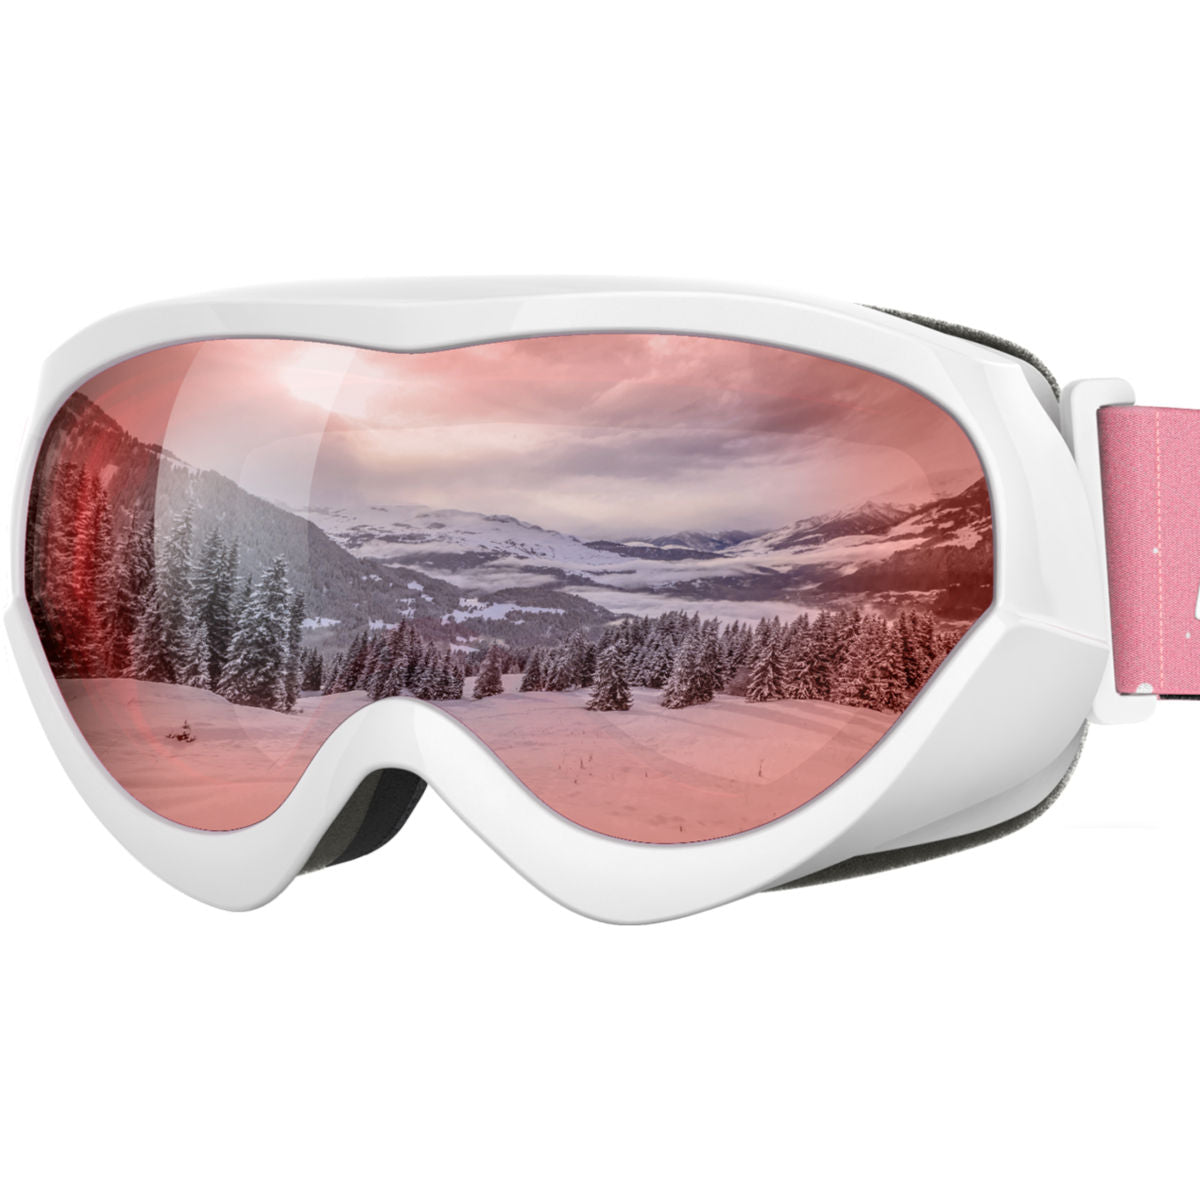 kids ski goggles